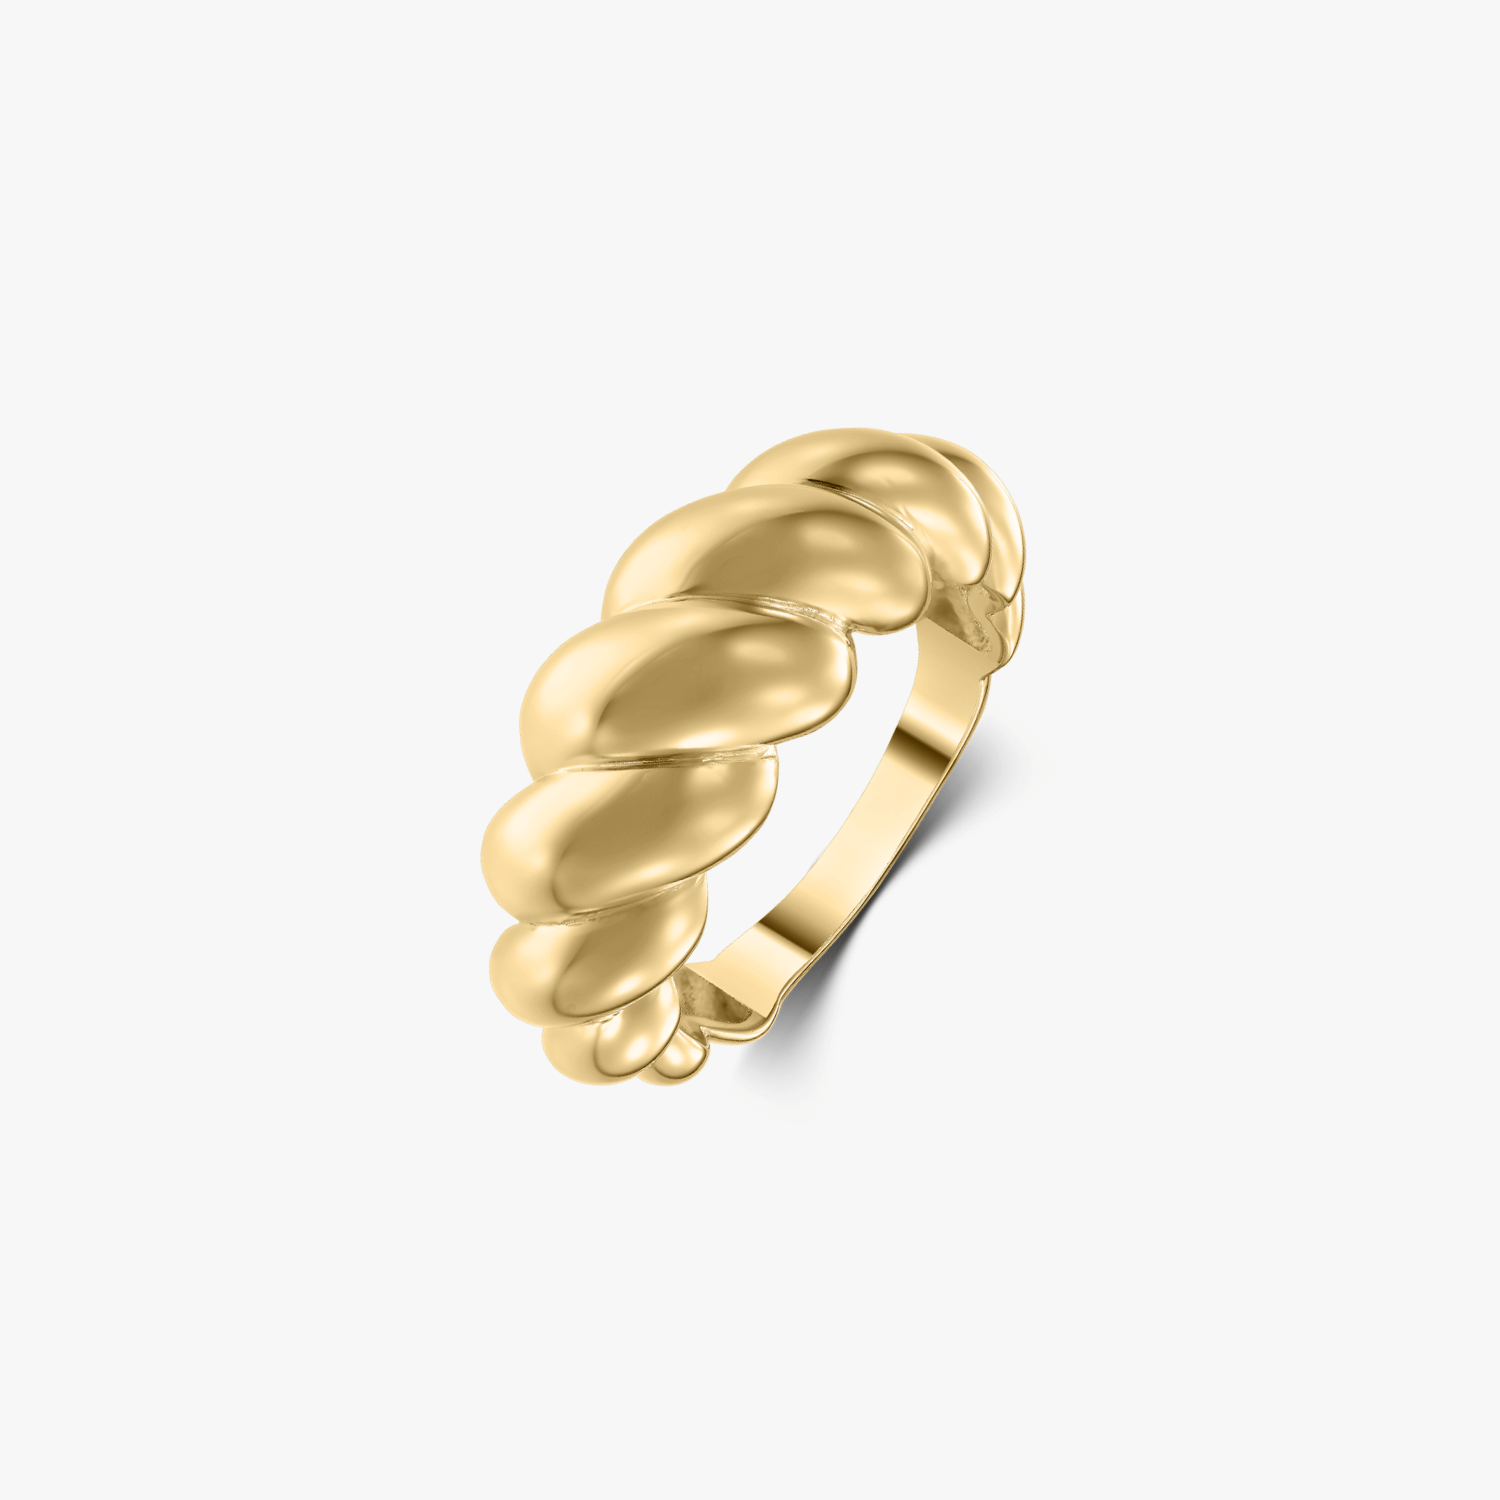 Golden Brioche silver ring